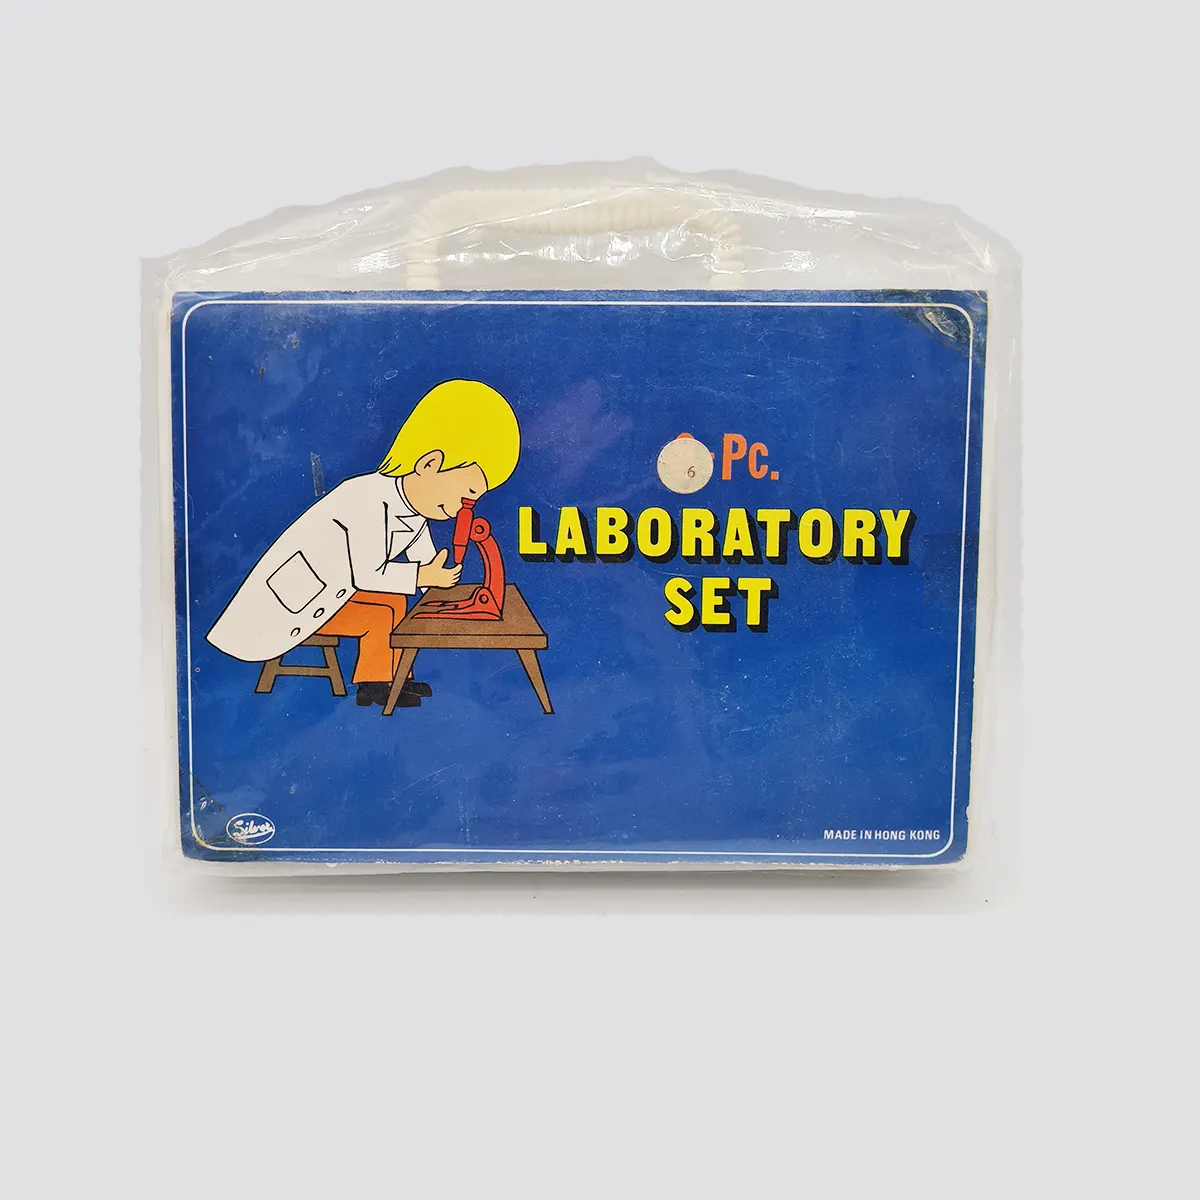 Laboratory set 1